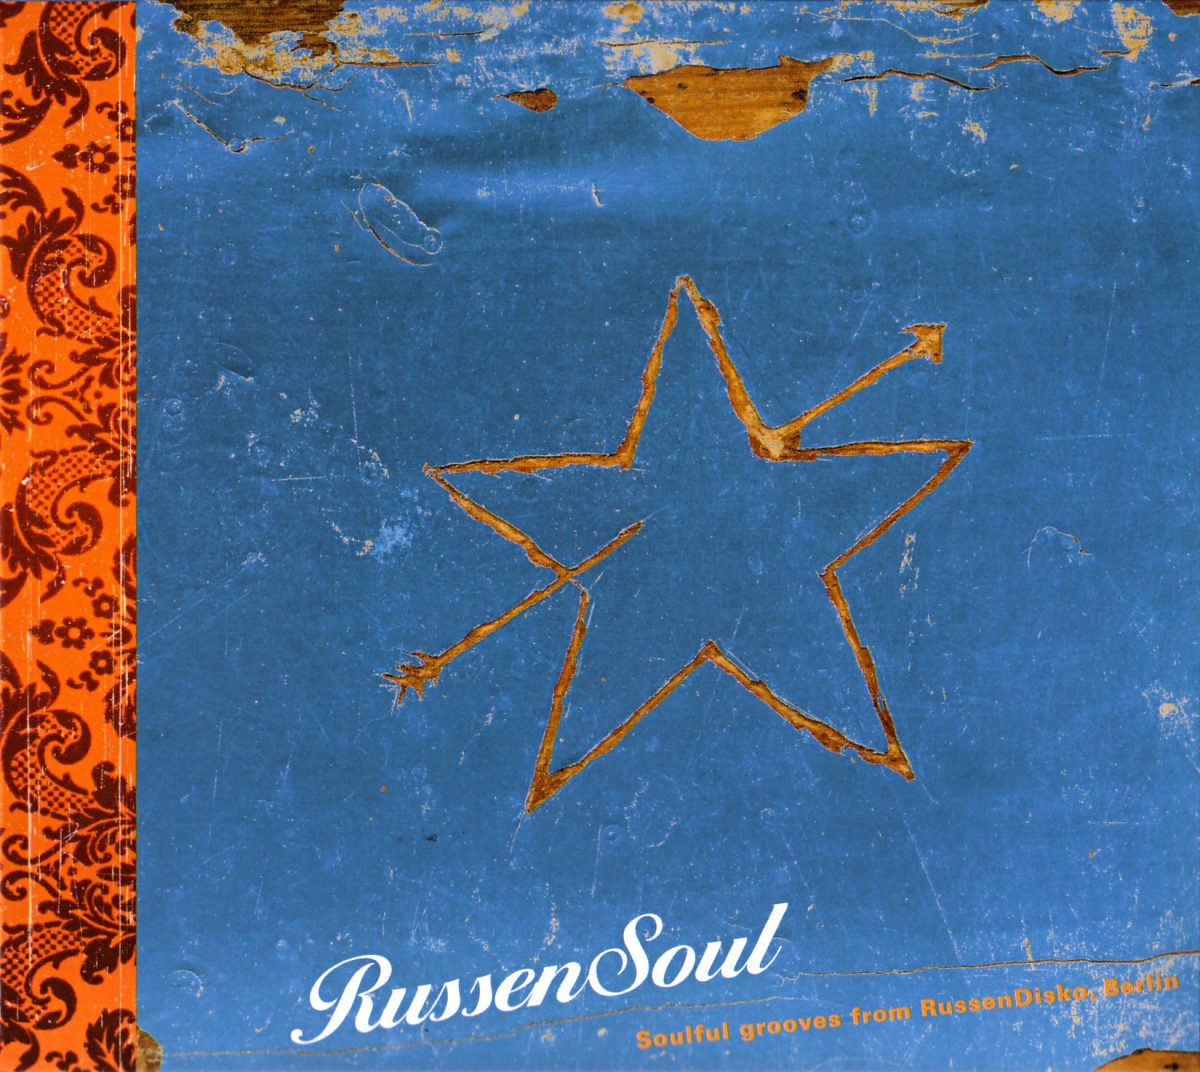 Russensoul - Soulful grooves from Russendisko Berlin